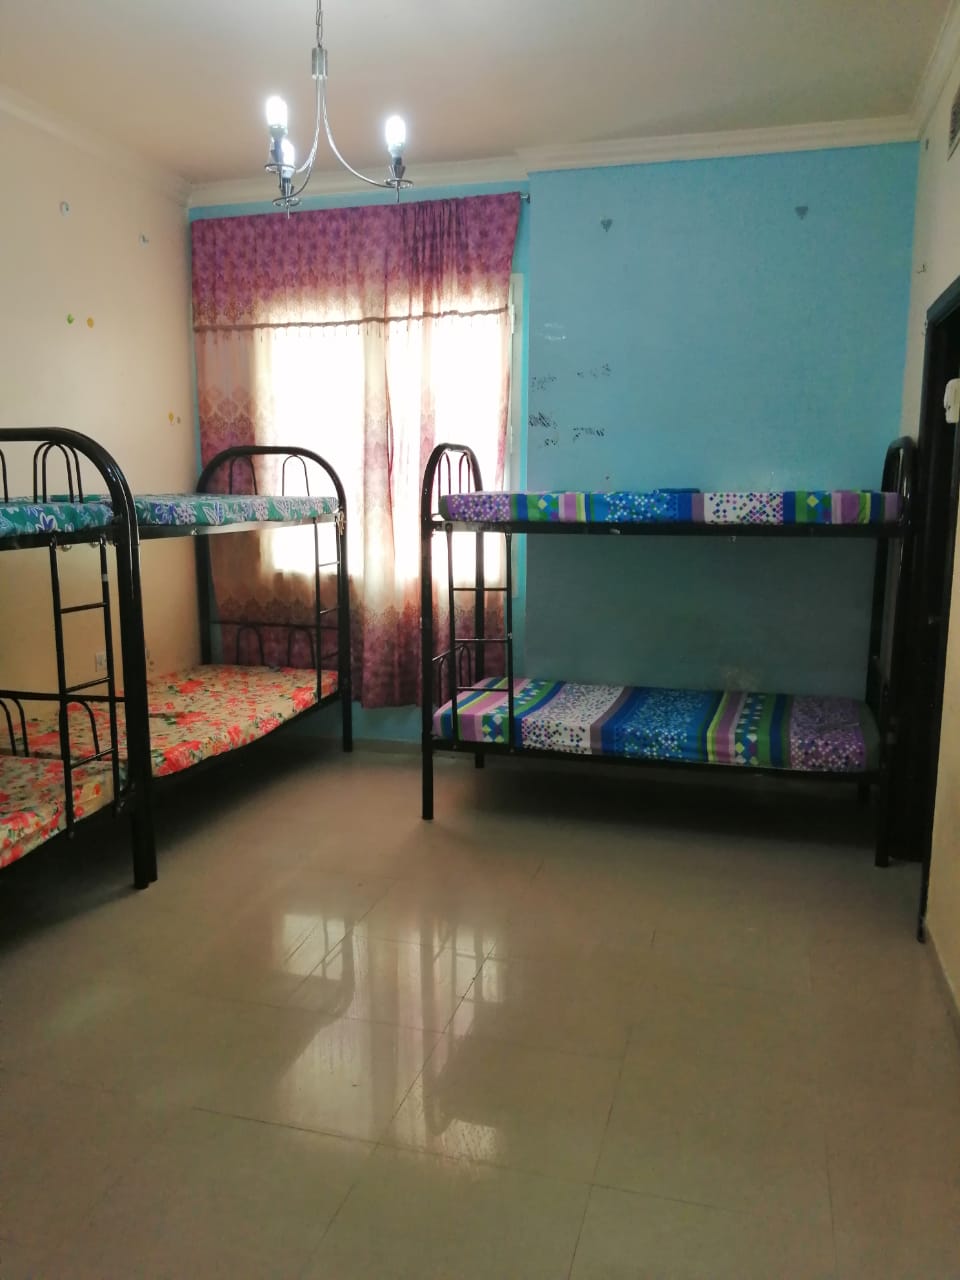 Bed Spaces Available for Males in Bur Dubai @700 & @800 Inclusive All, C/Ac, Gas, Dewa, Wifi